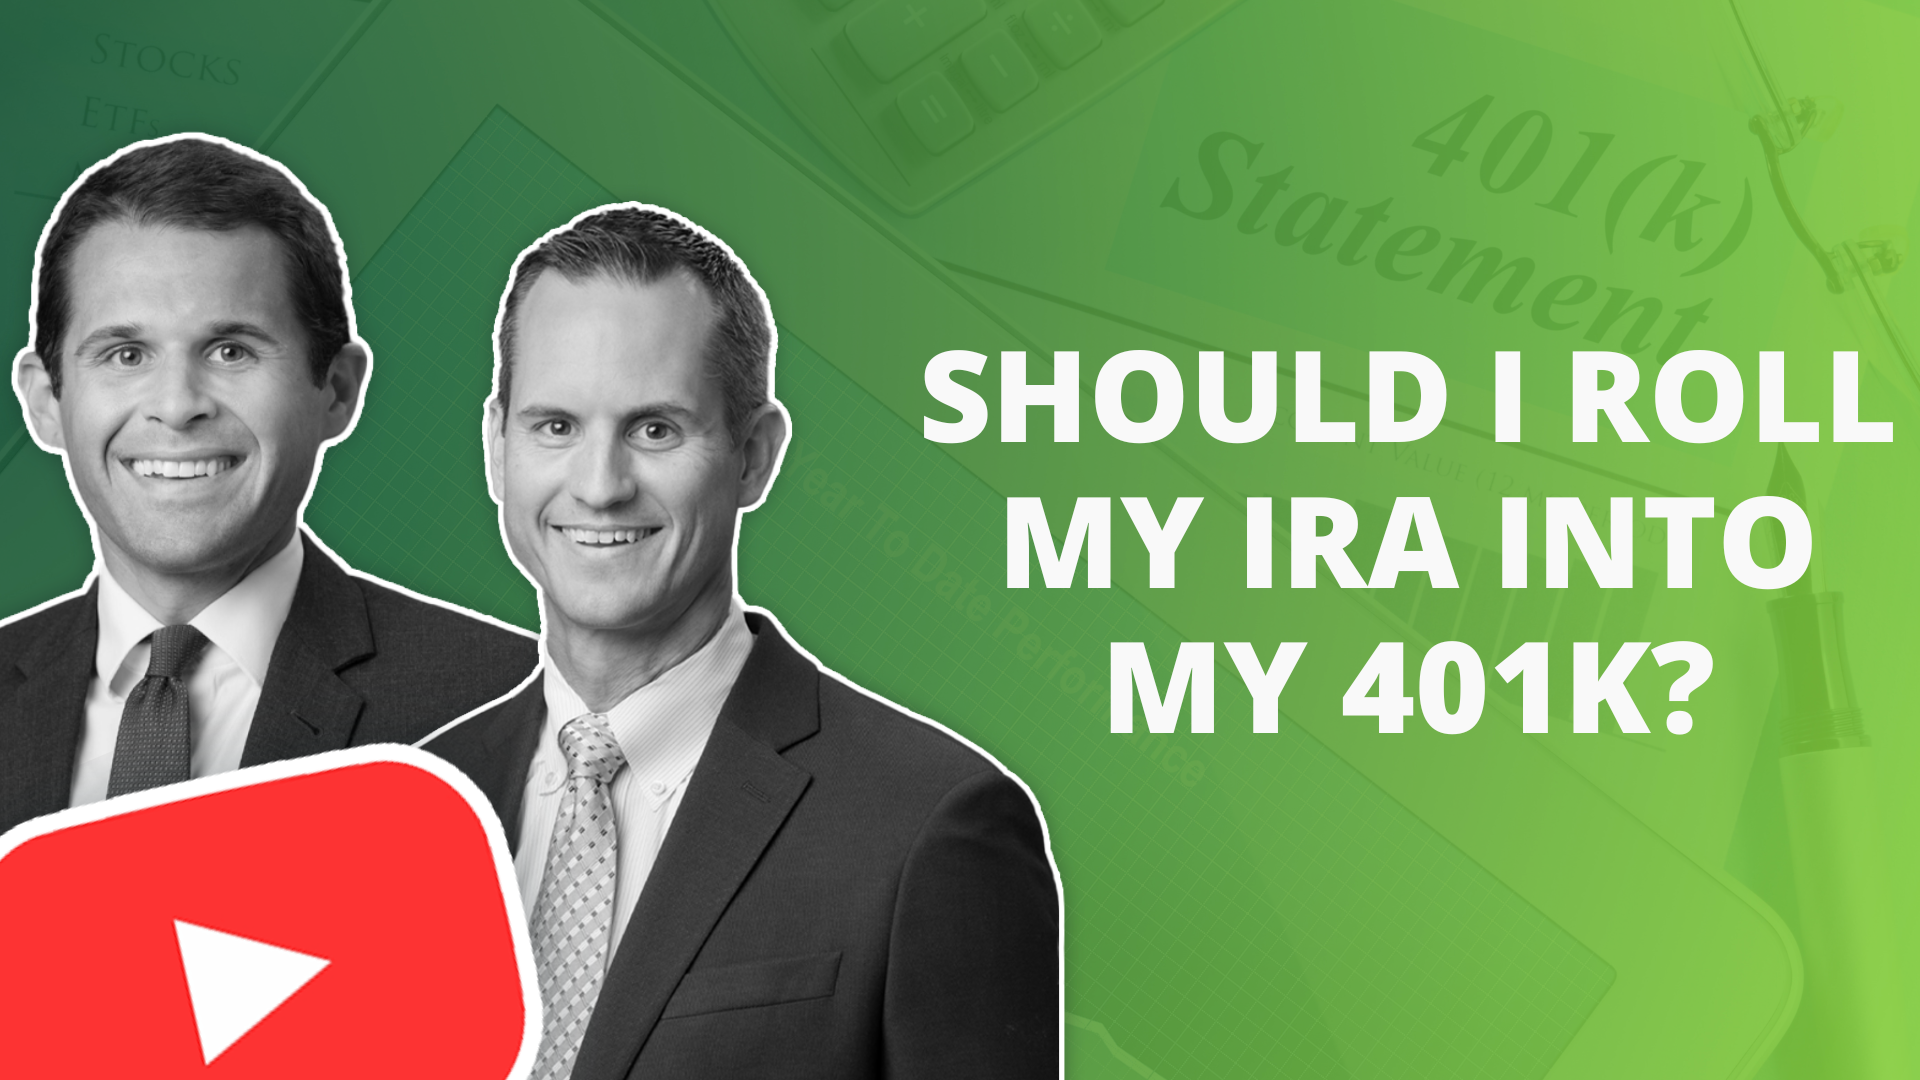 Should I roll my IRA into my 401k